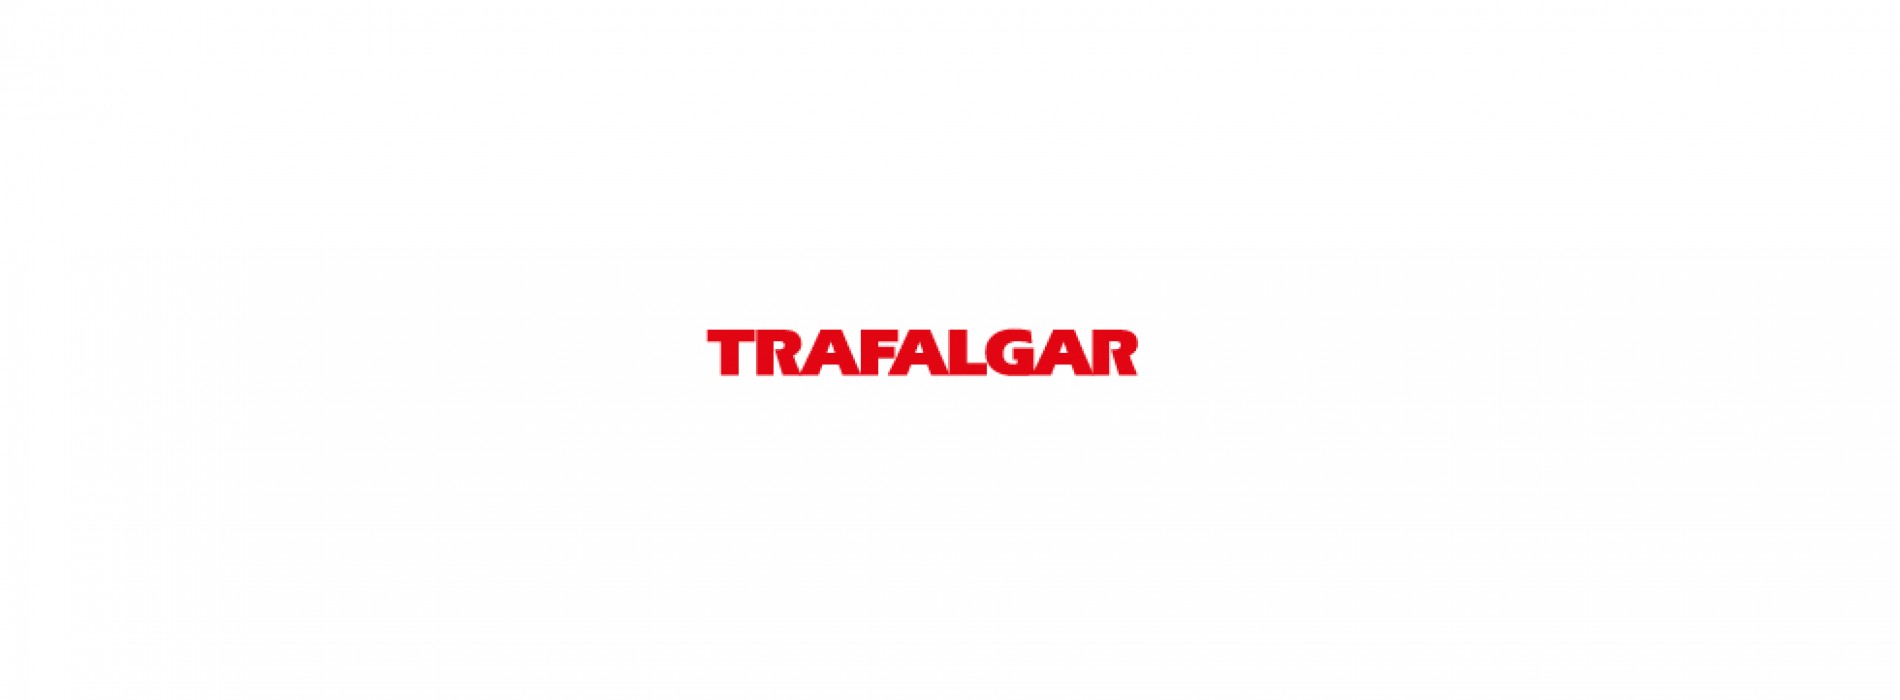 Trafalgar is jetting off to three new Asian destinations